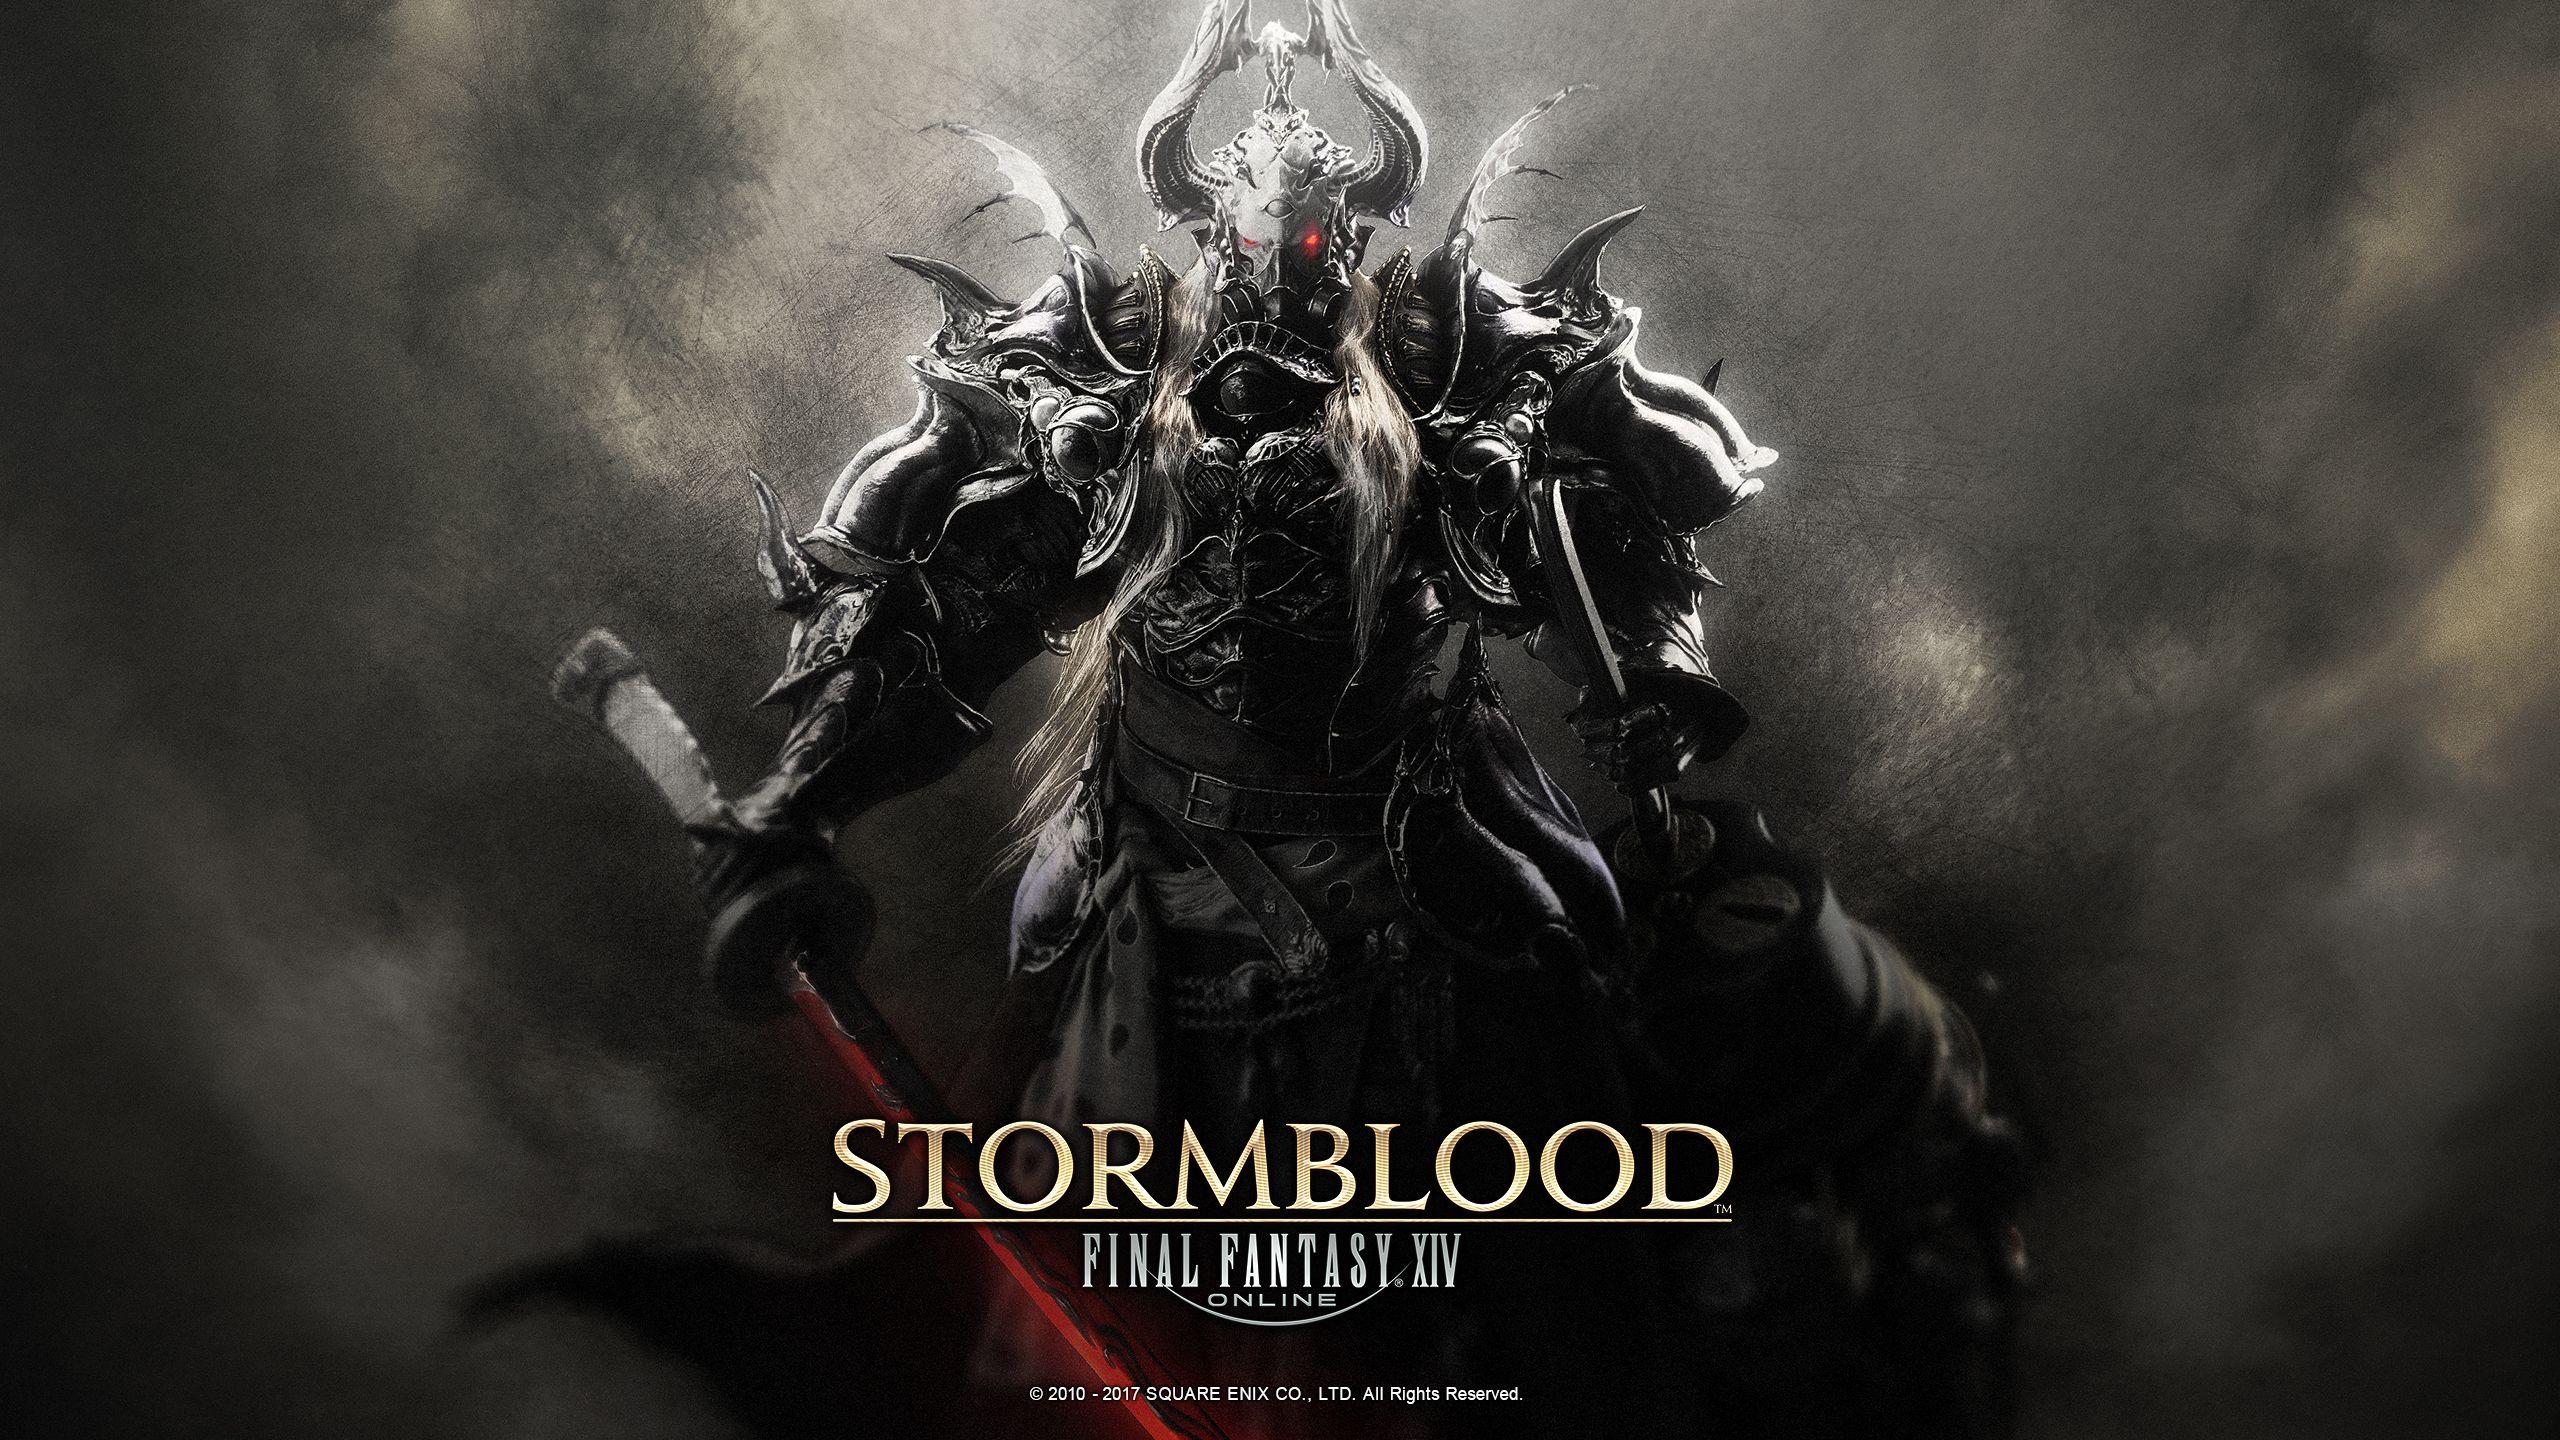 Final Fantasy XIV's Expansion Stormblood Gets New Screenshots